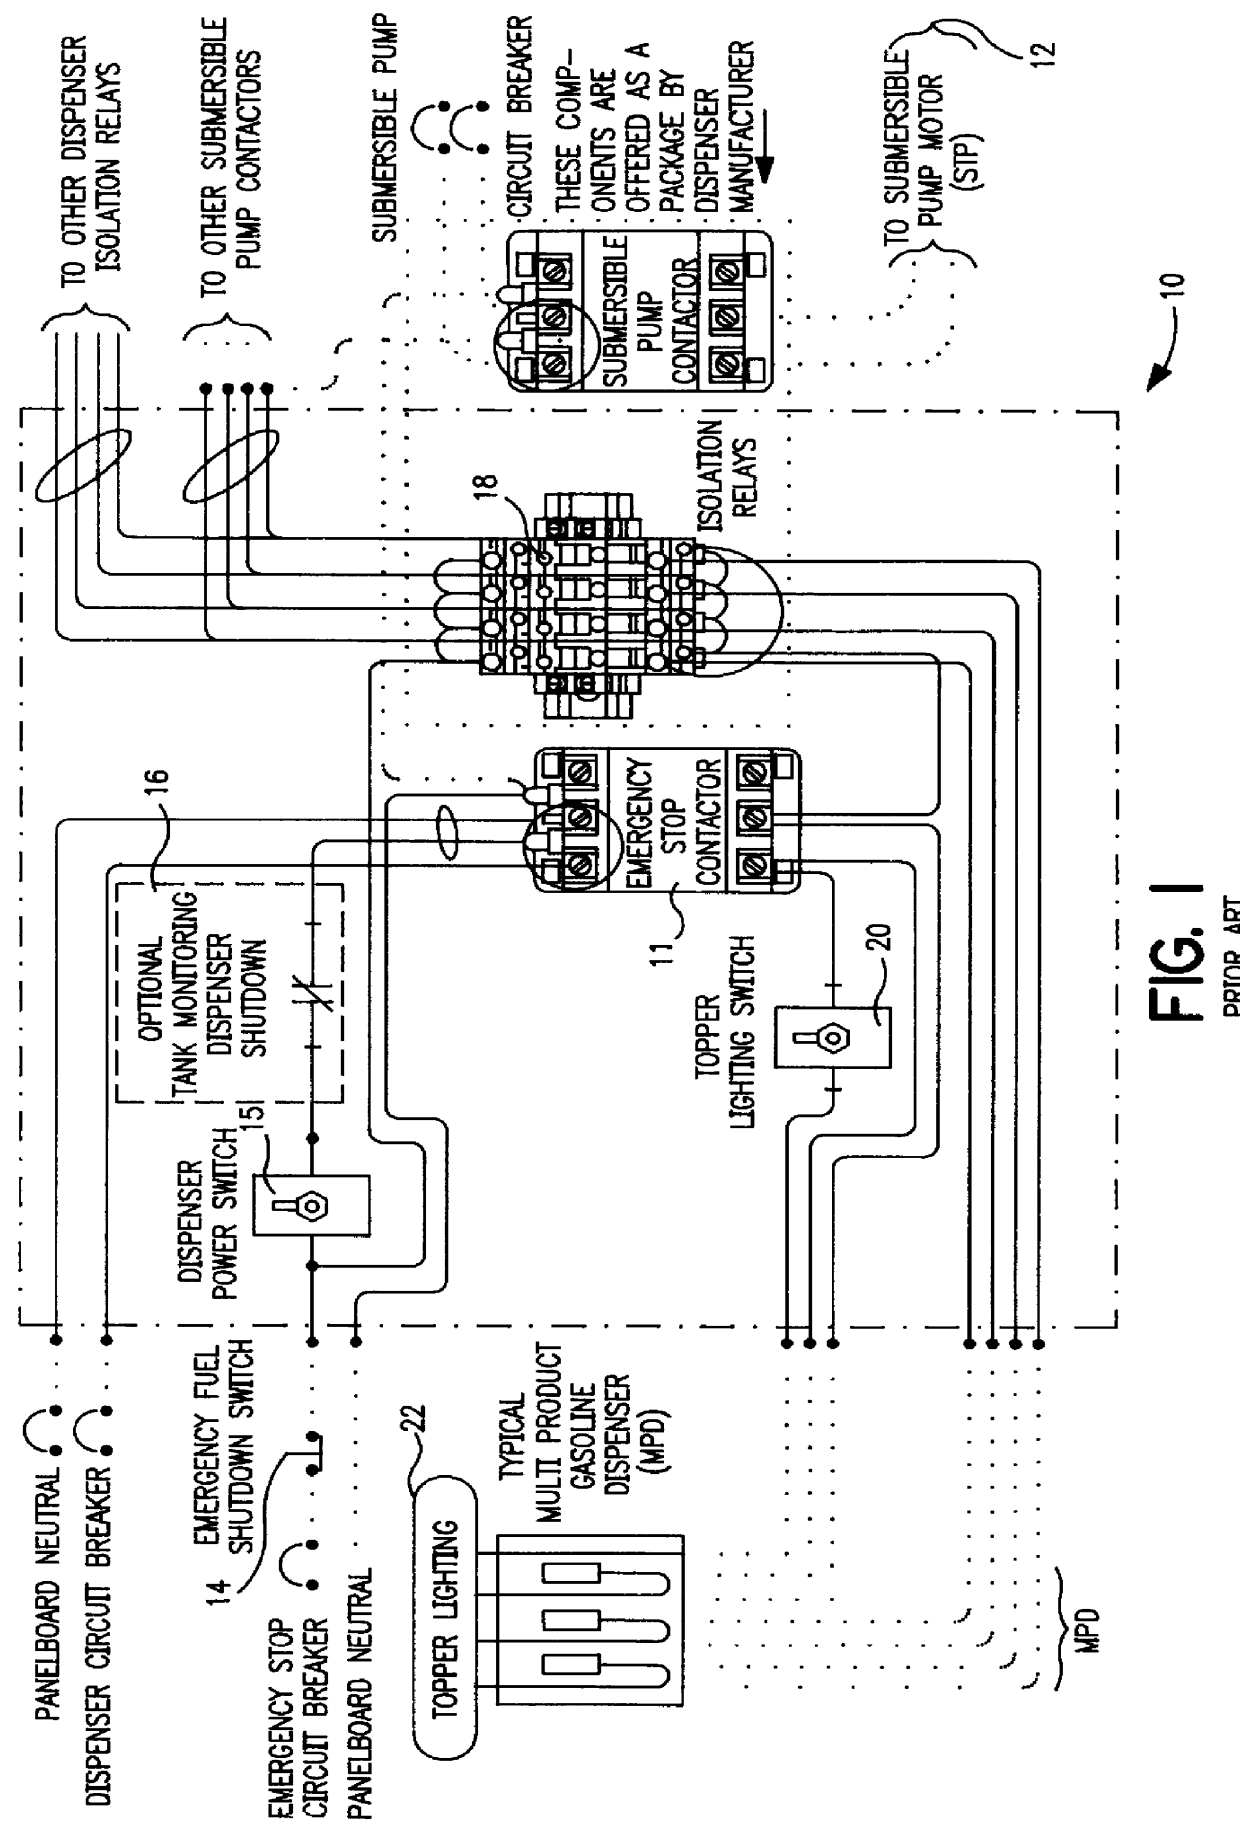 Control circuit for multi-product fuel dispenser